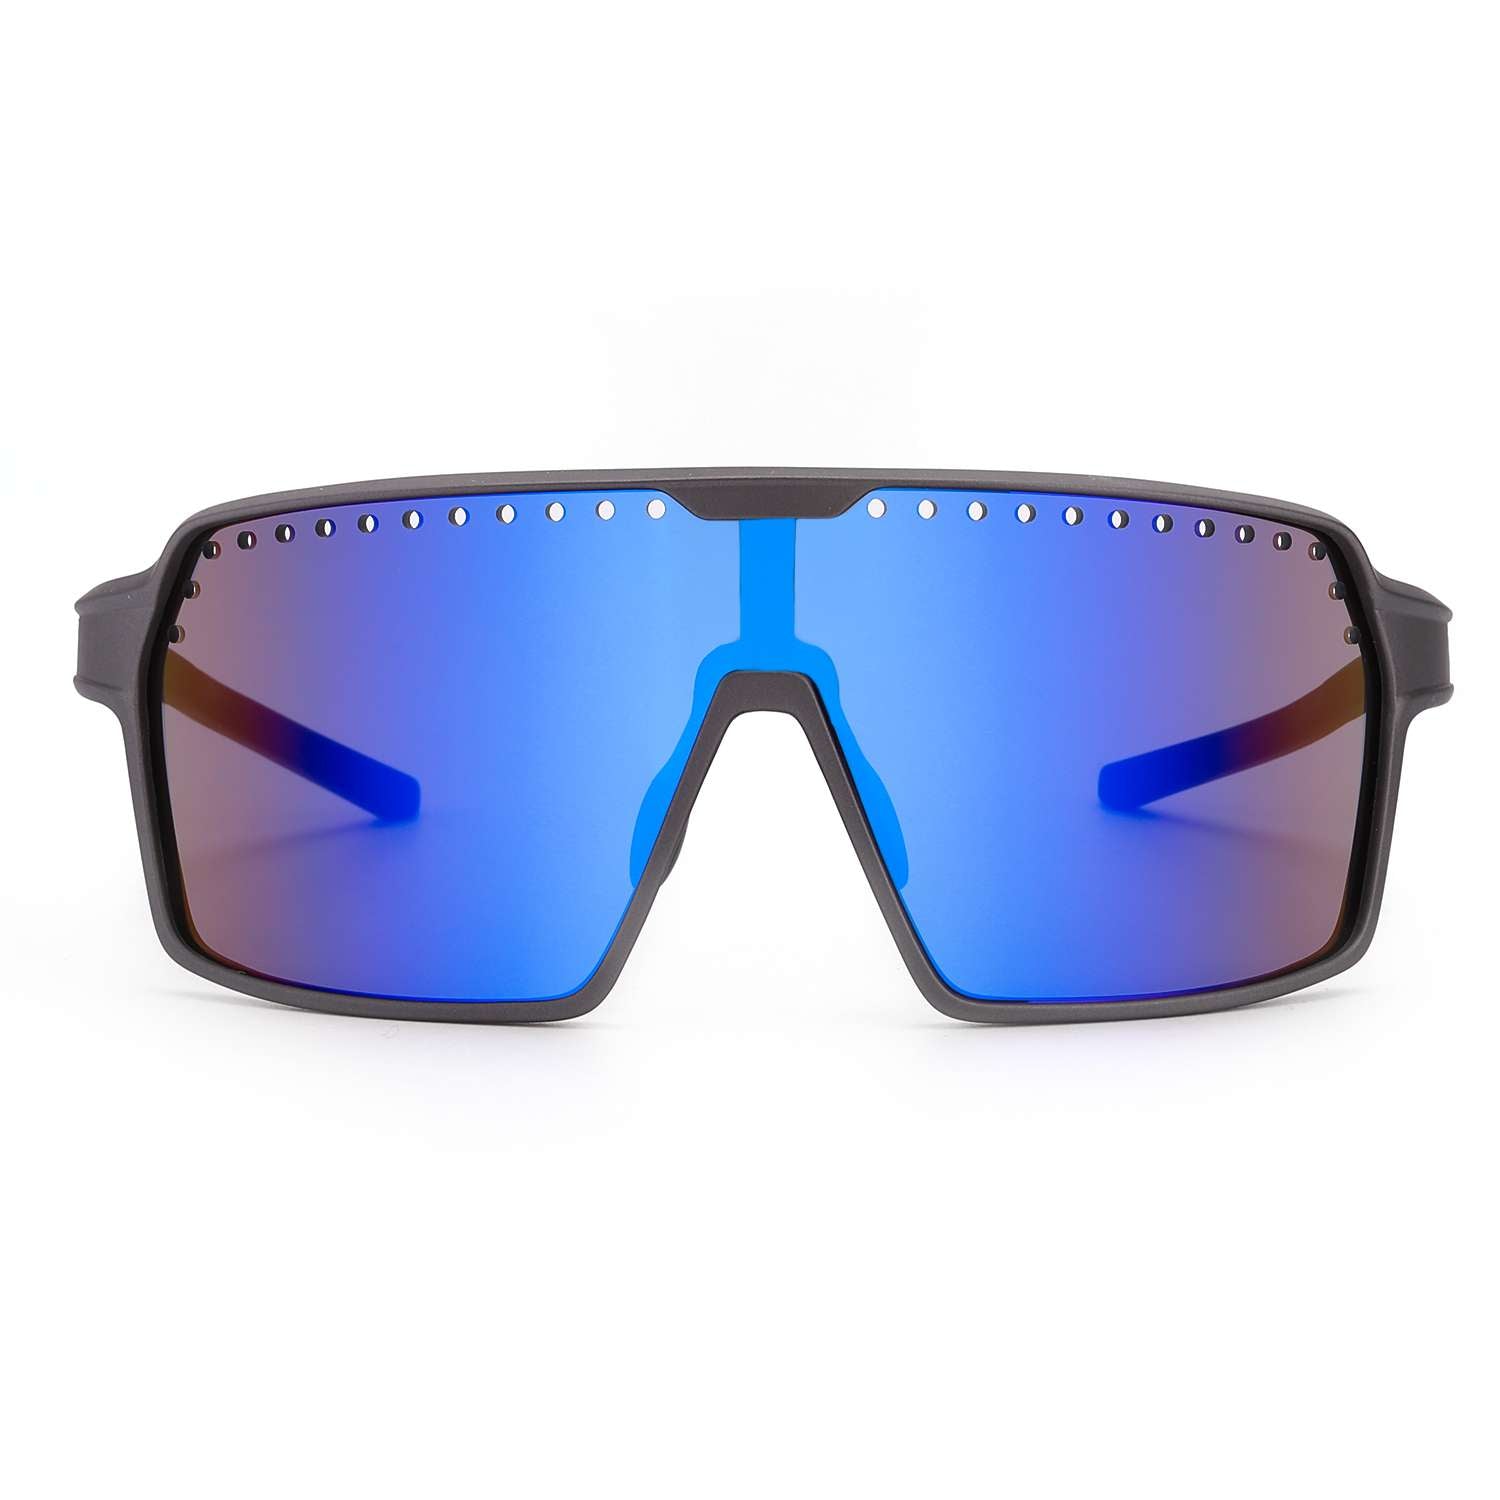 Nitrogen Polarized Wrap Around Sport Sunglasses for Men Women - UV400 Running Cycling Fishing Driving Sun Glasses, Men's, Size: One Fits Most, Blue